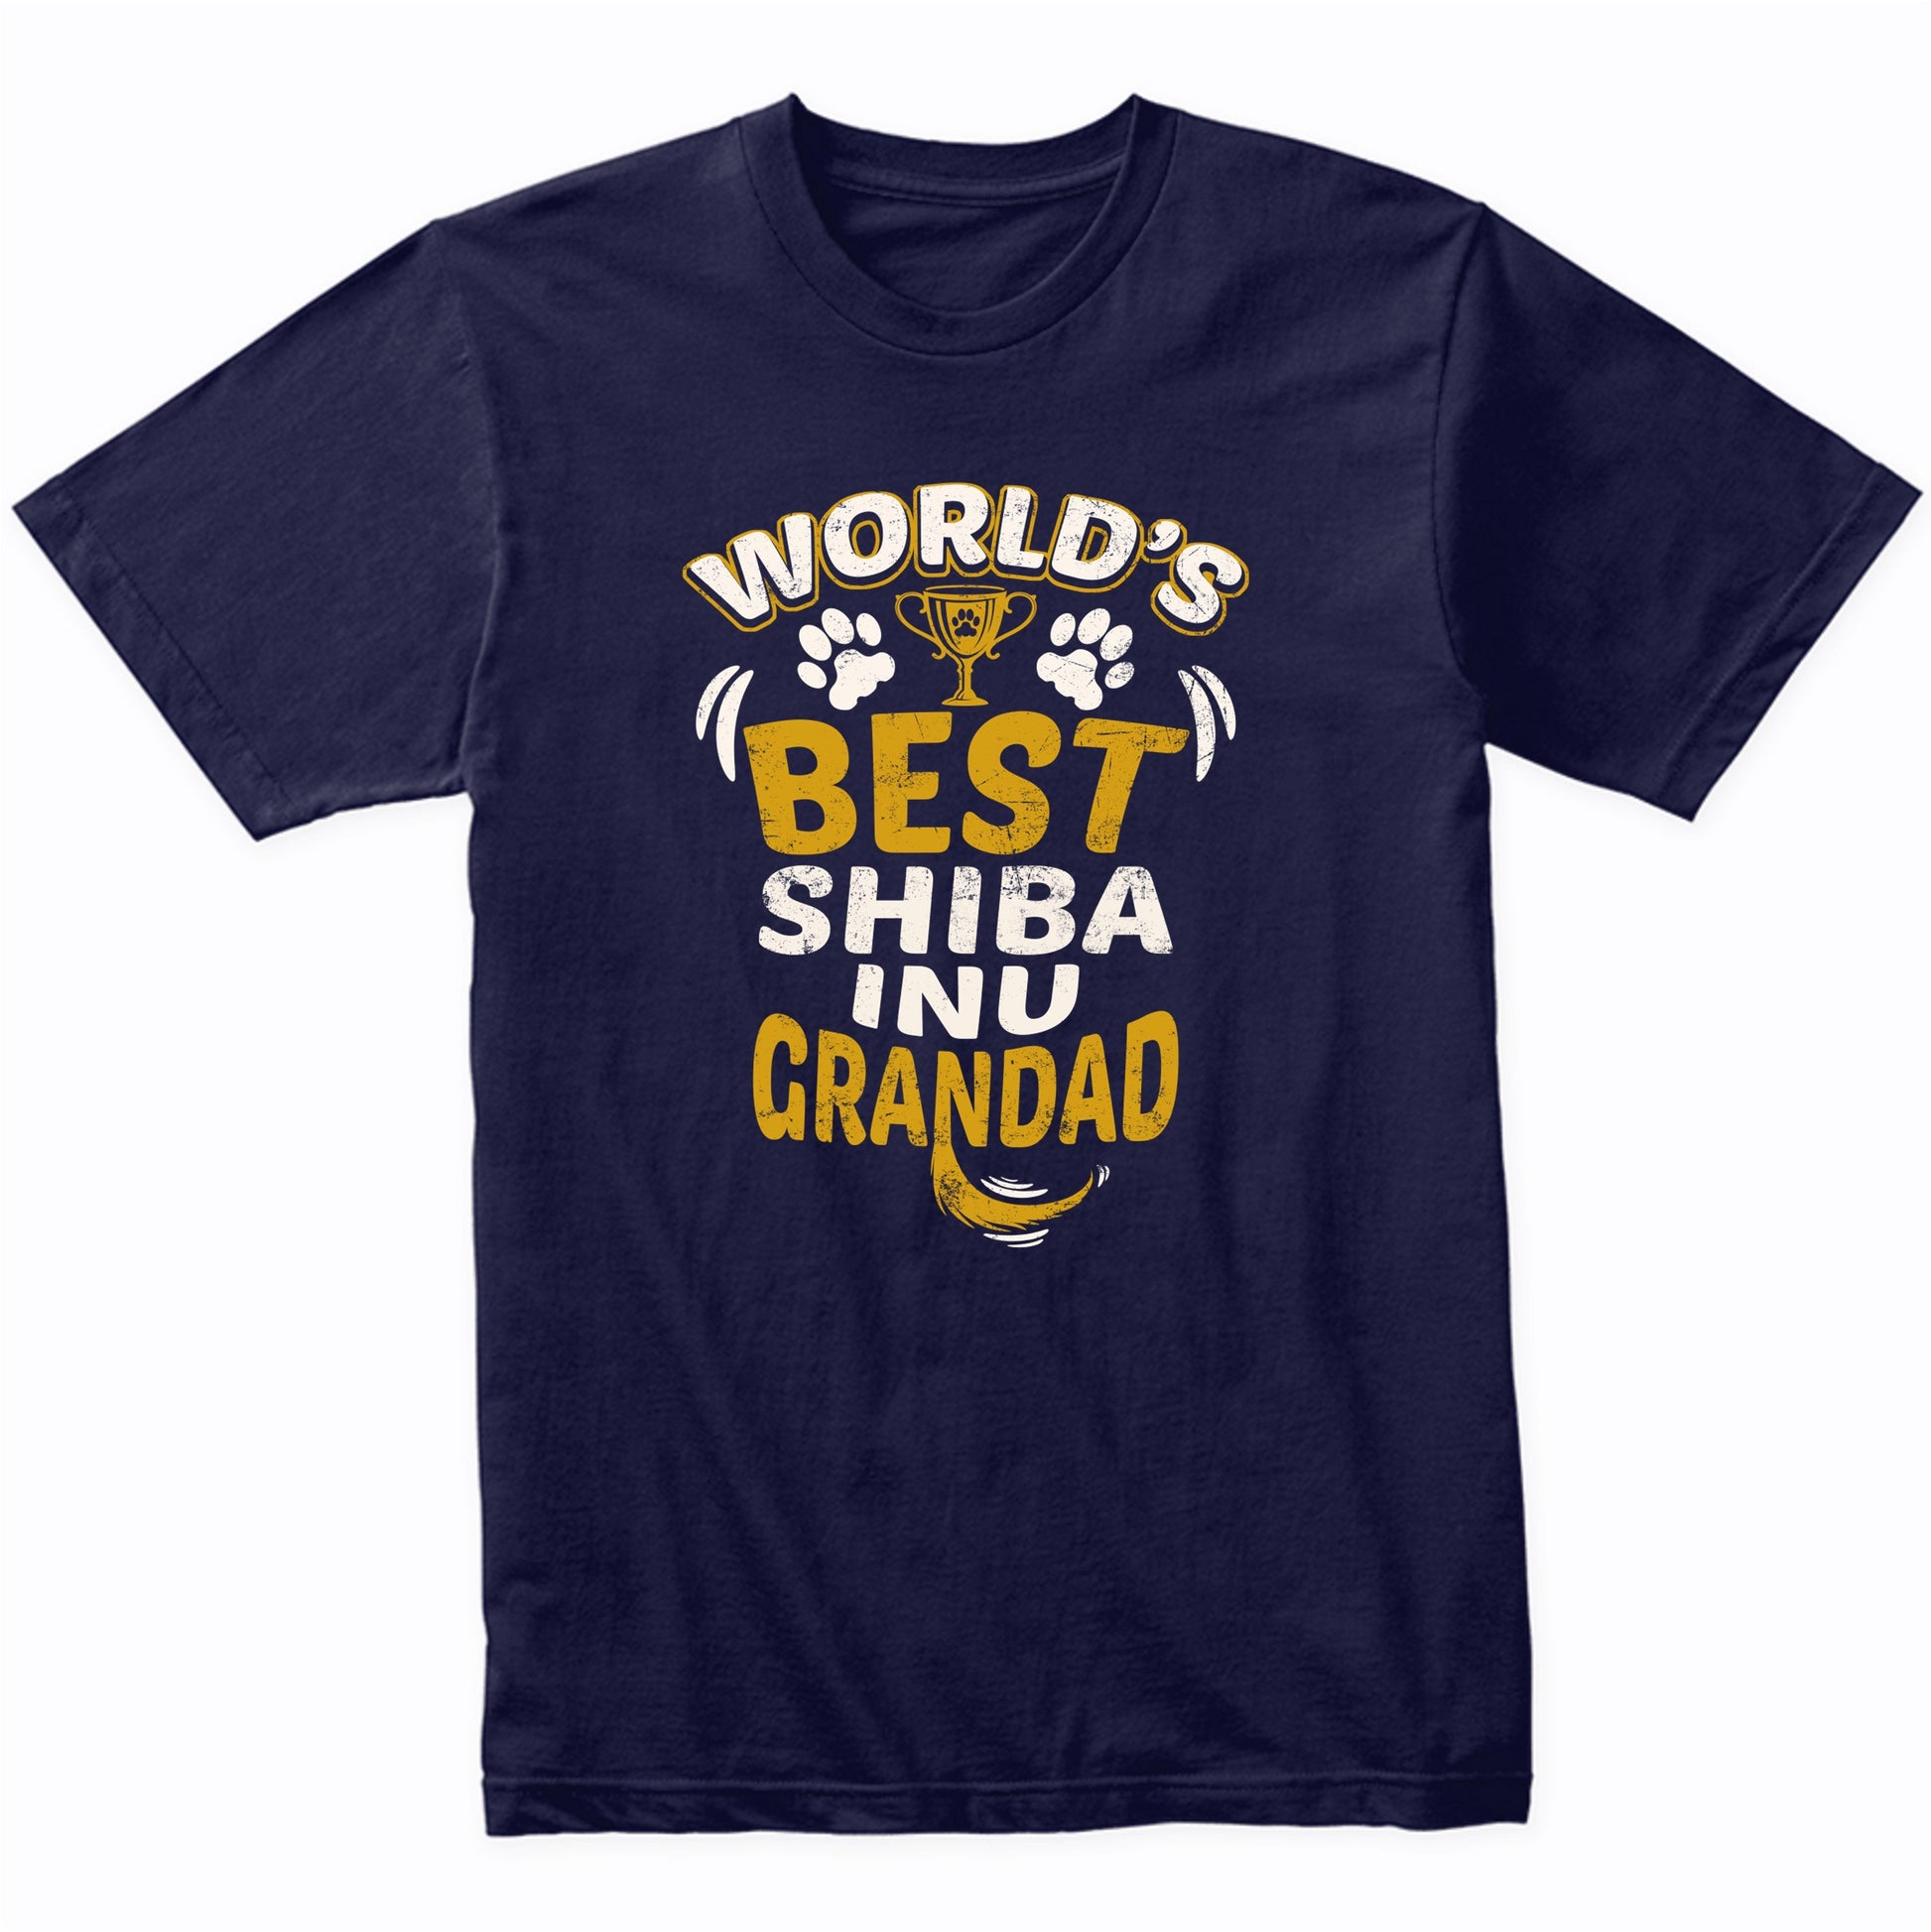 World's Best Shiba Inu Grandad Graphic T-Shirt